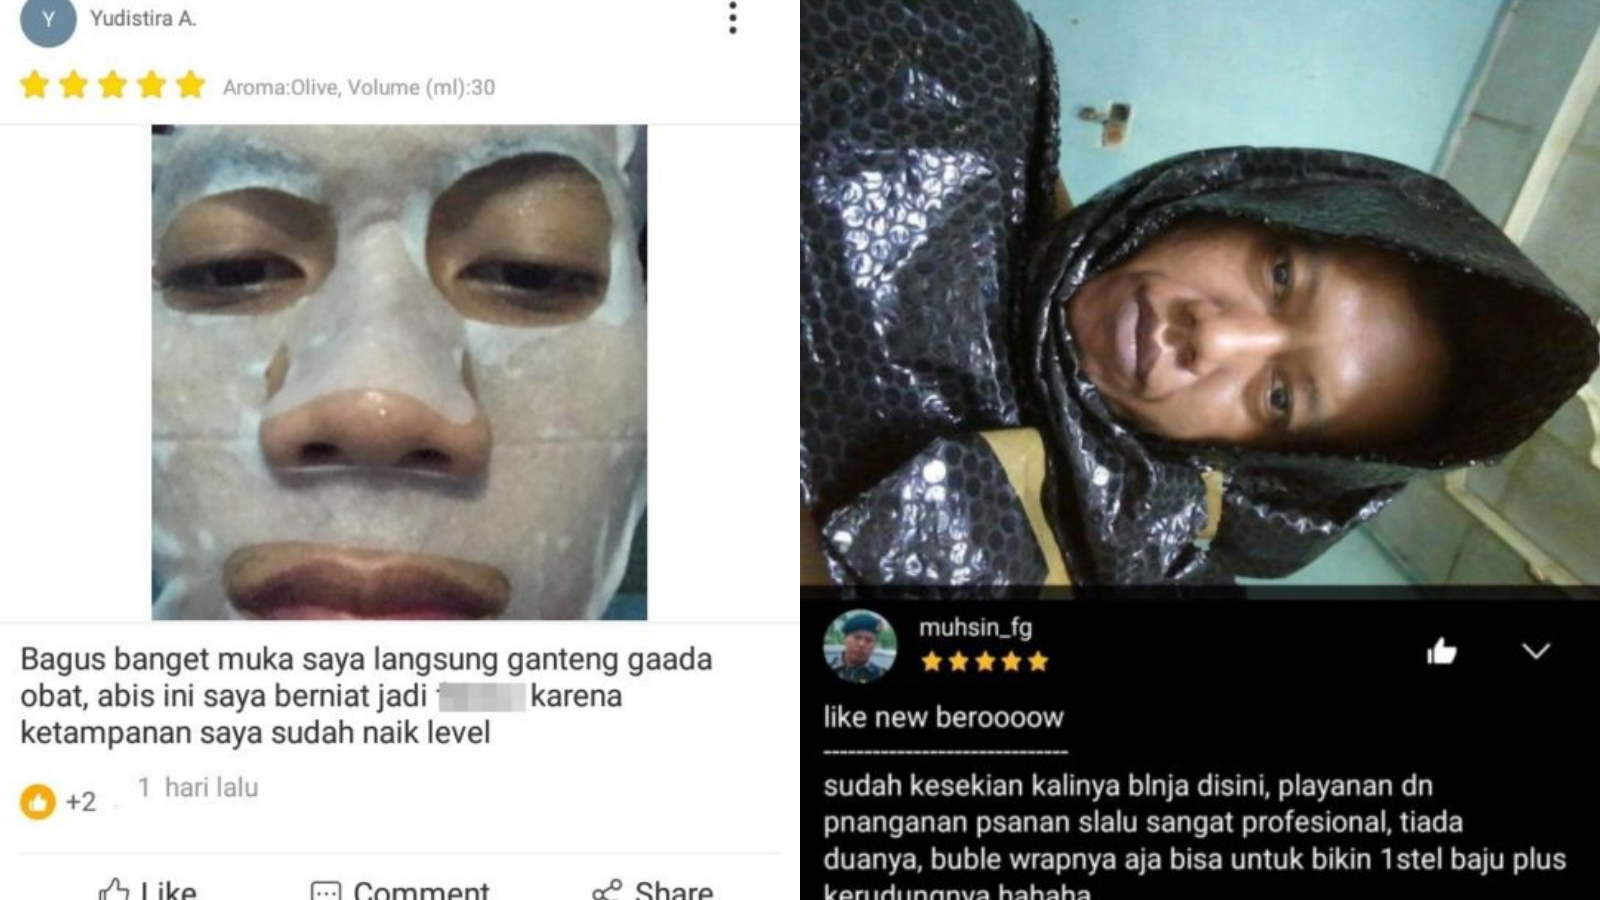 10 Testimoni Orang Setelah Belanja di Olshop Ini Receh Banget, Netizen +62 Emang Kreatif